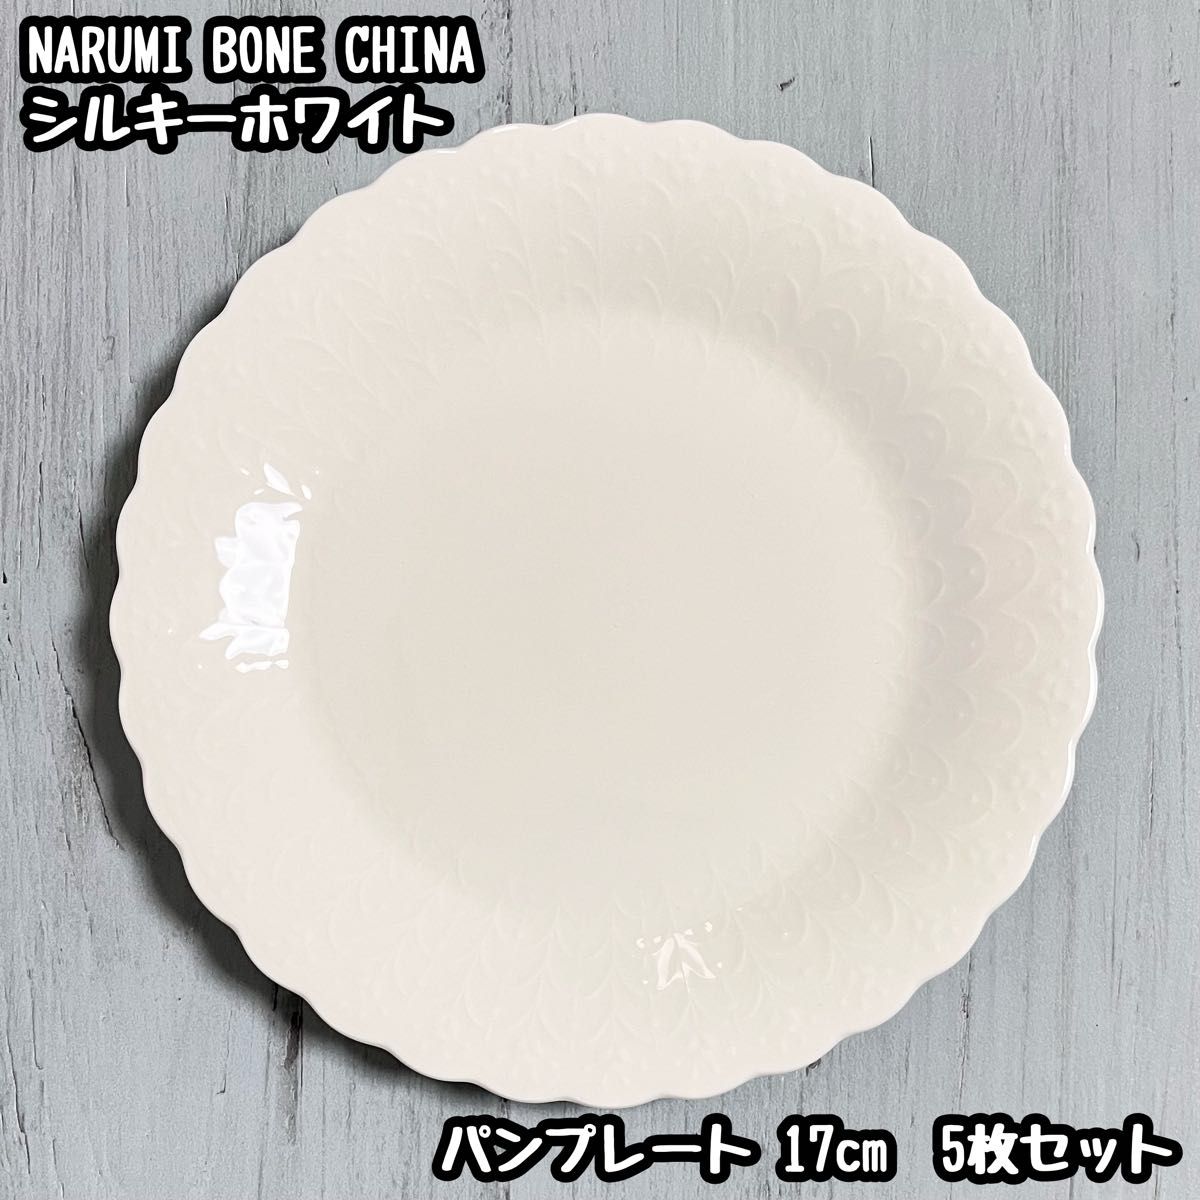 NARUMI BONE CHINA シルキーホワイト パンプレート 5枚